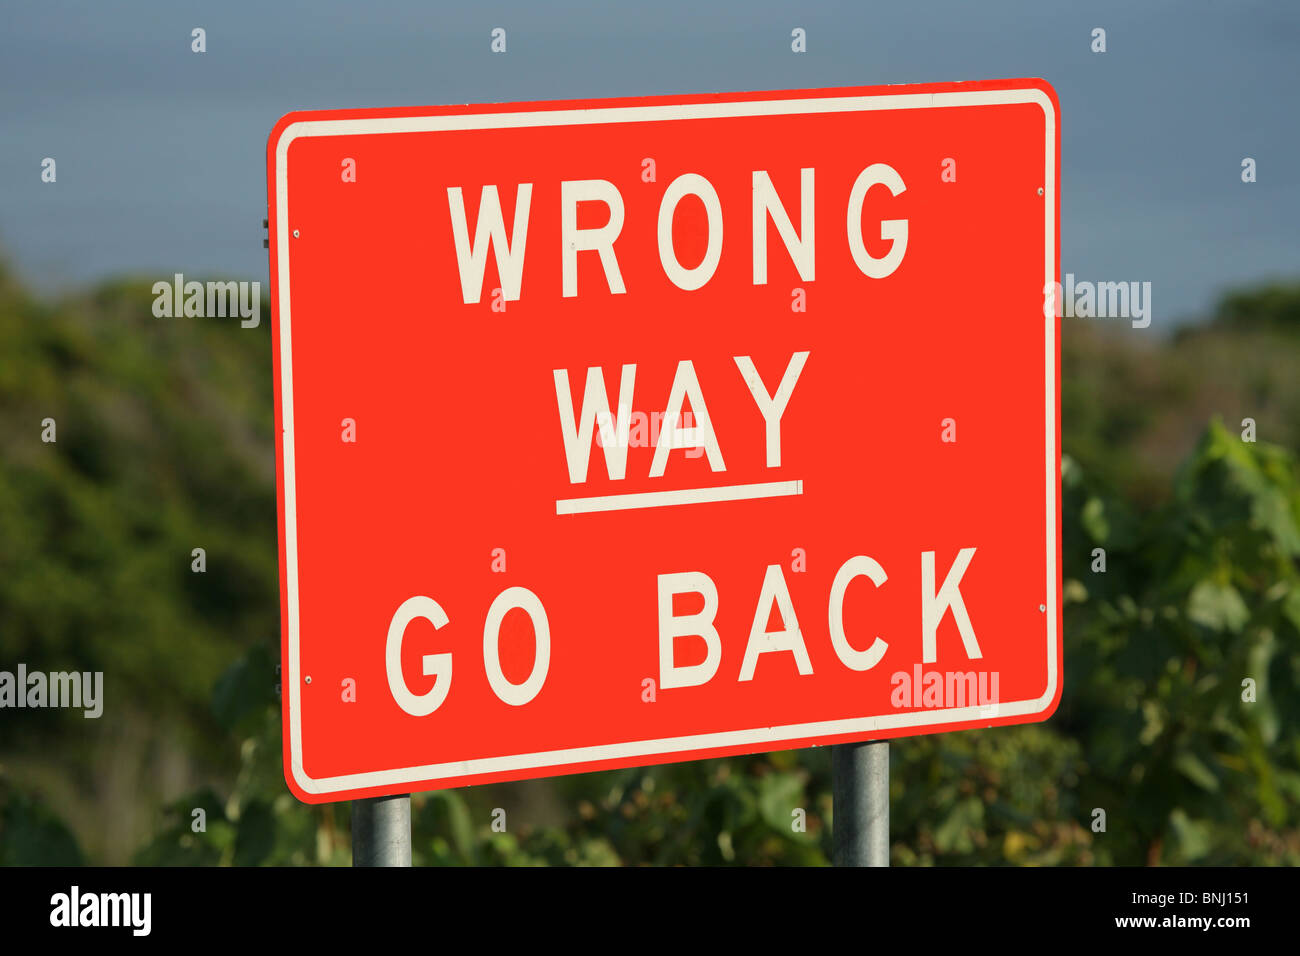 Wrong Way Go Back sign Stock Photo